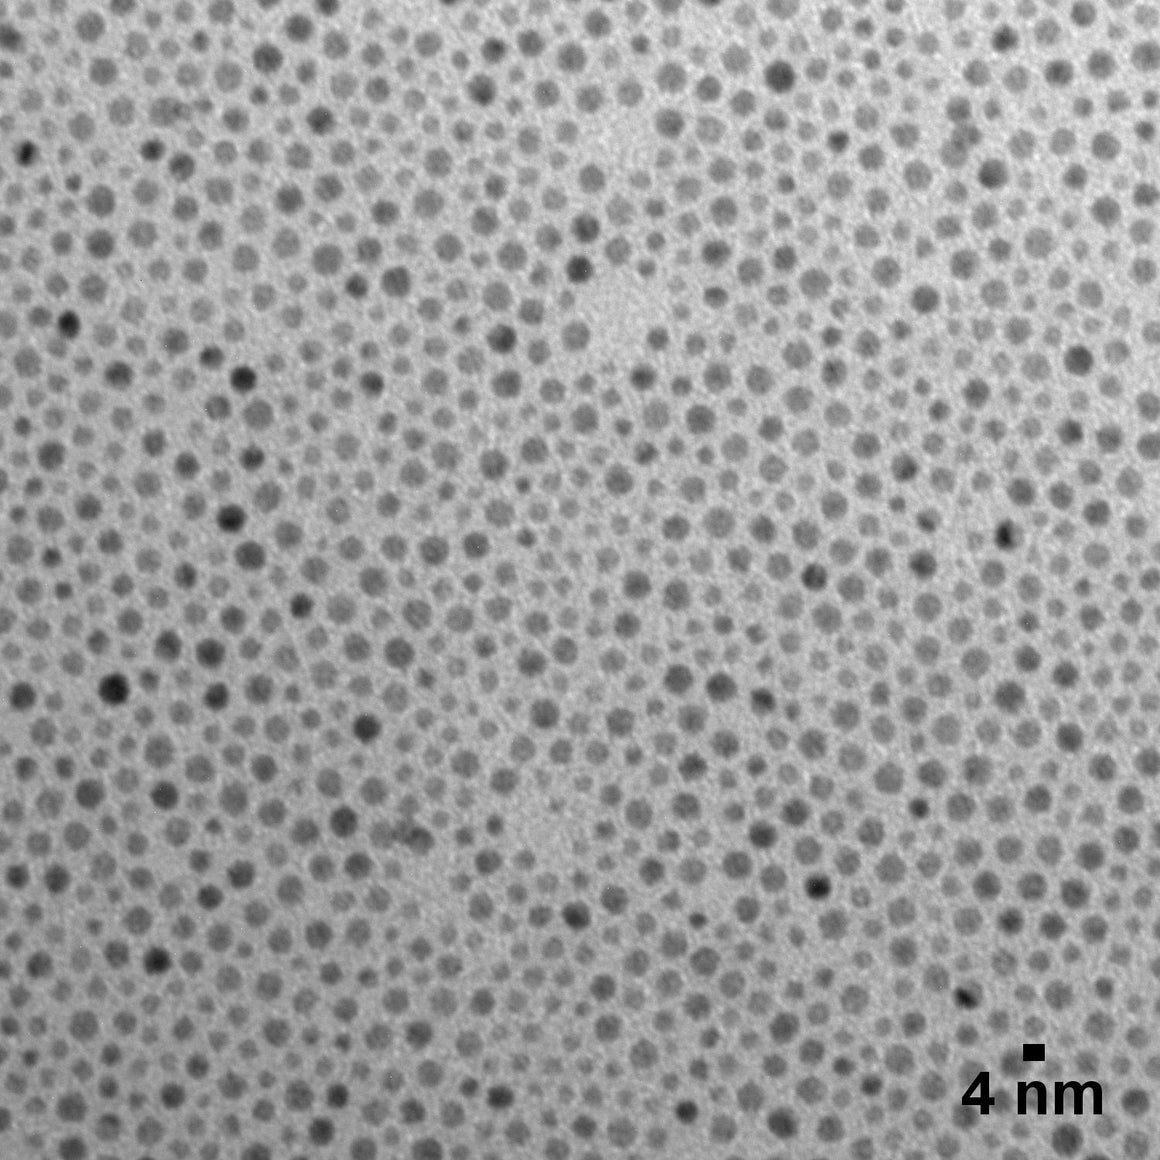 NanoXact Silver Nanospheres – Dodecanethiol (Dried)